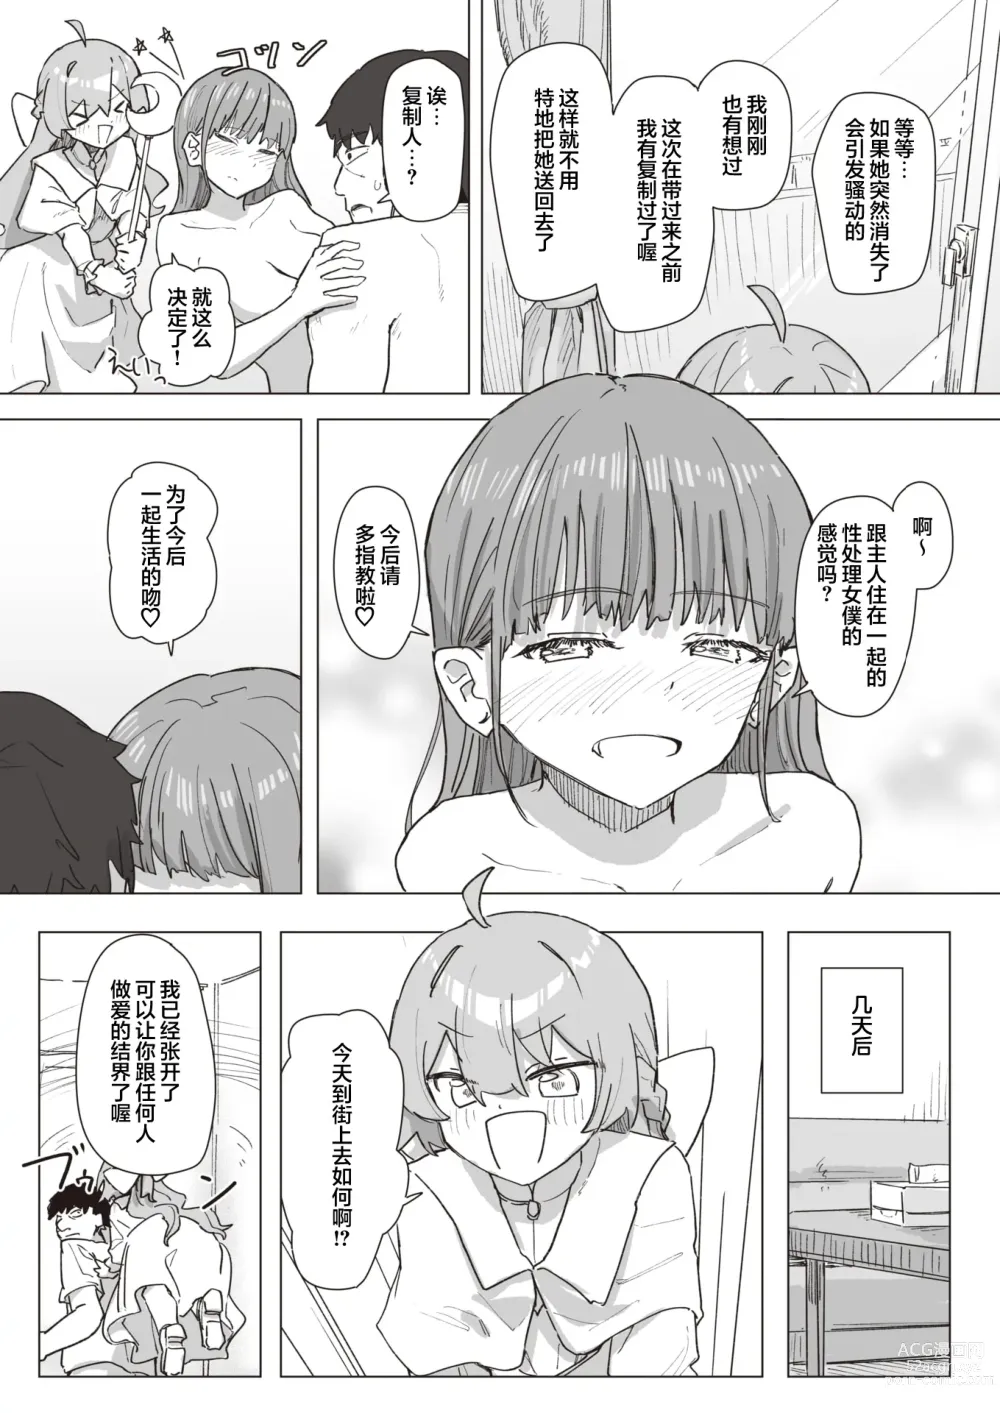 Page 15 of manga Mahou Shoujo no Ongaeshi Chuuhen - Magical Girls Giving Back